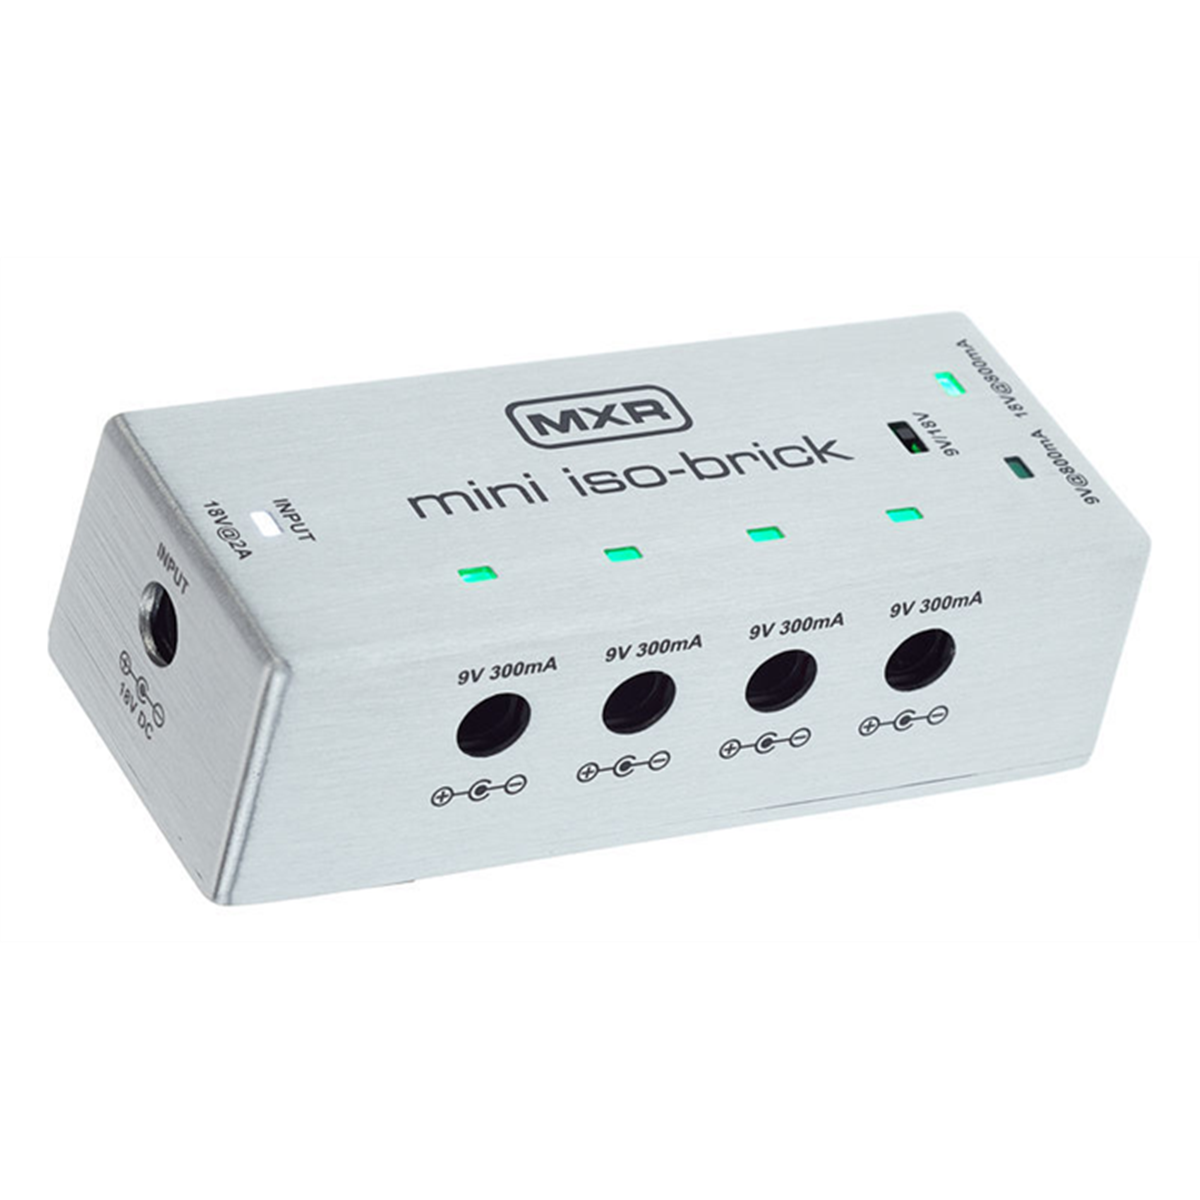 Omega Music  MXR M239 Mini Iso-Brick